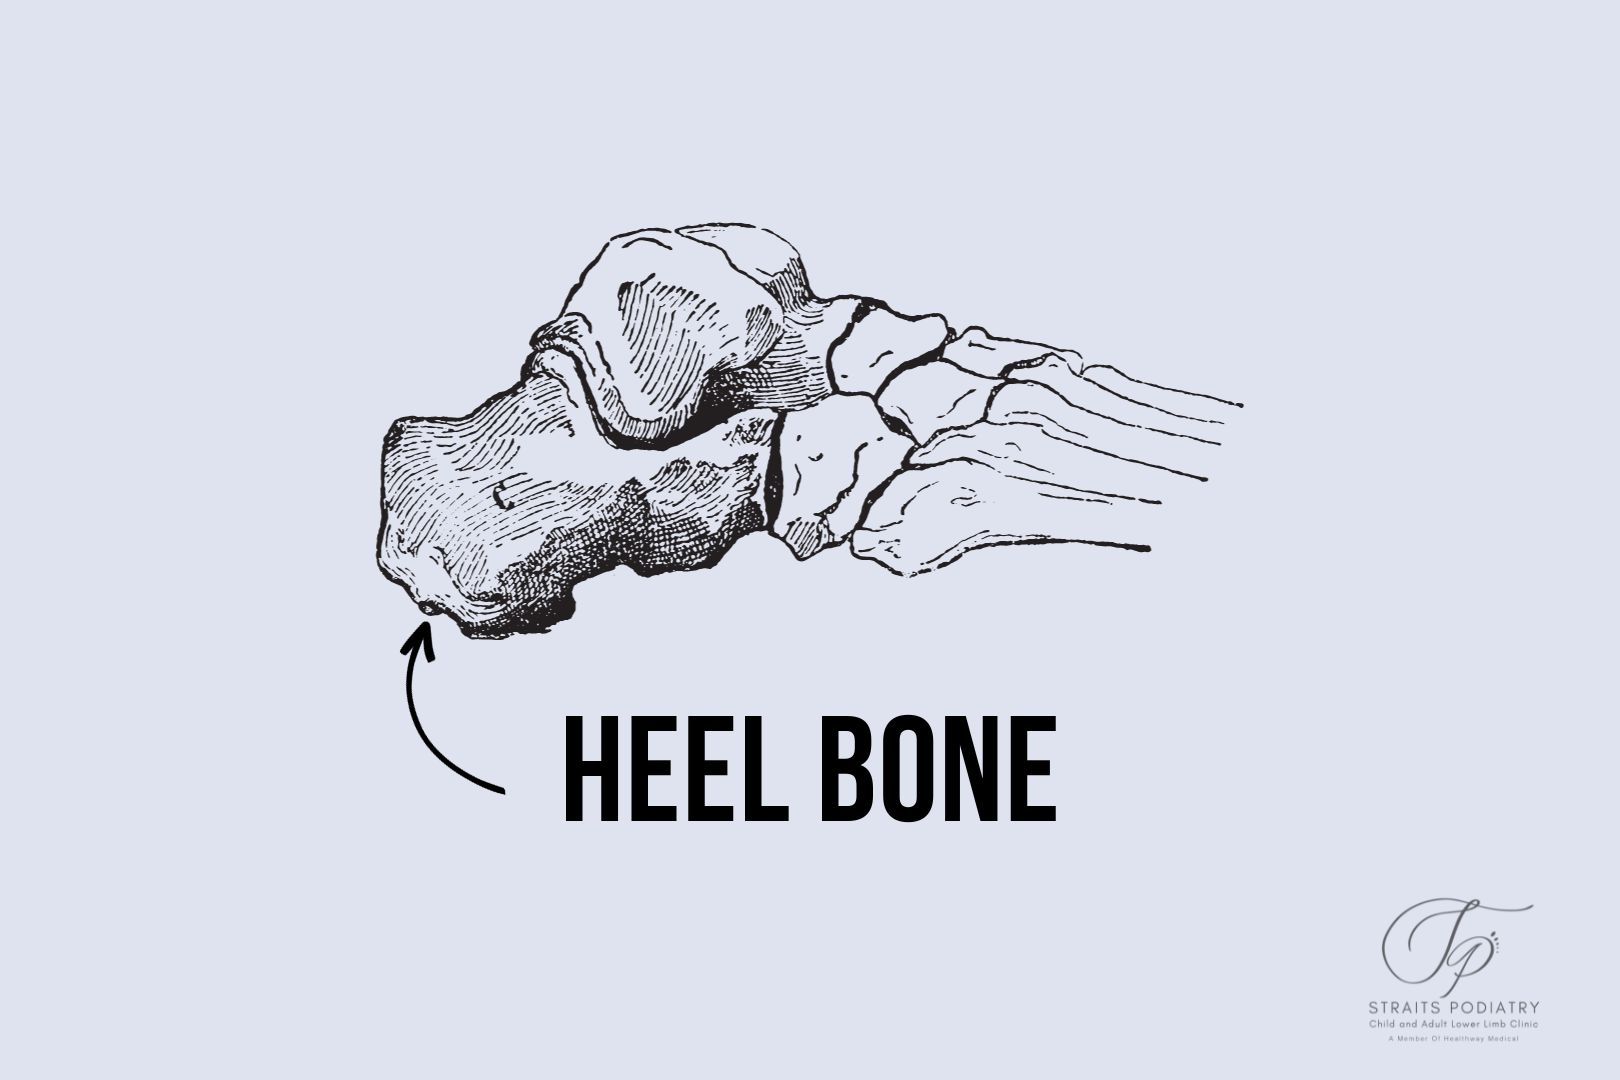 Anatomy of the heel. Photo showing the heel bone, or the calcaneus of the foot.